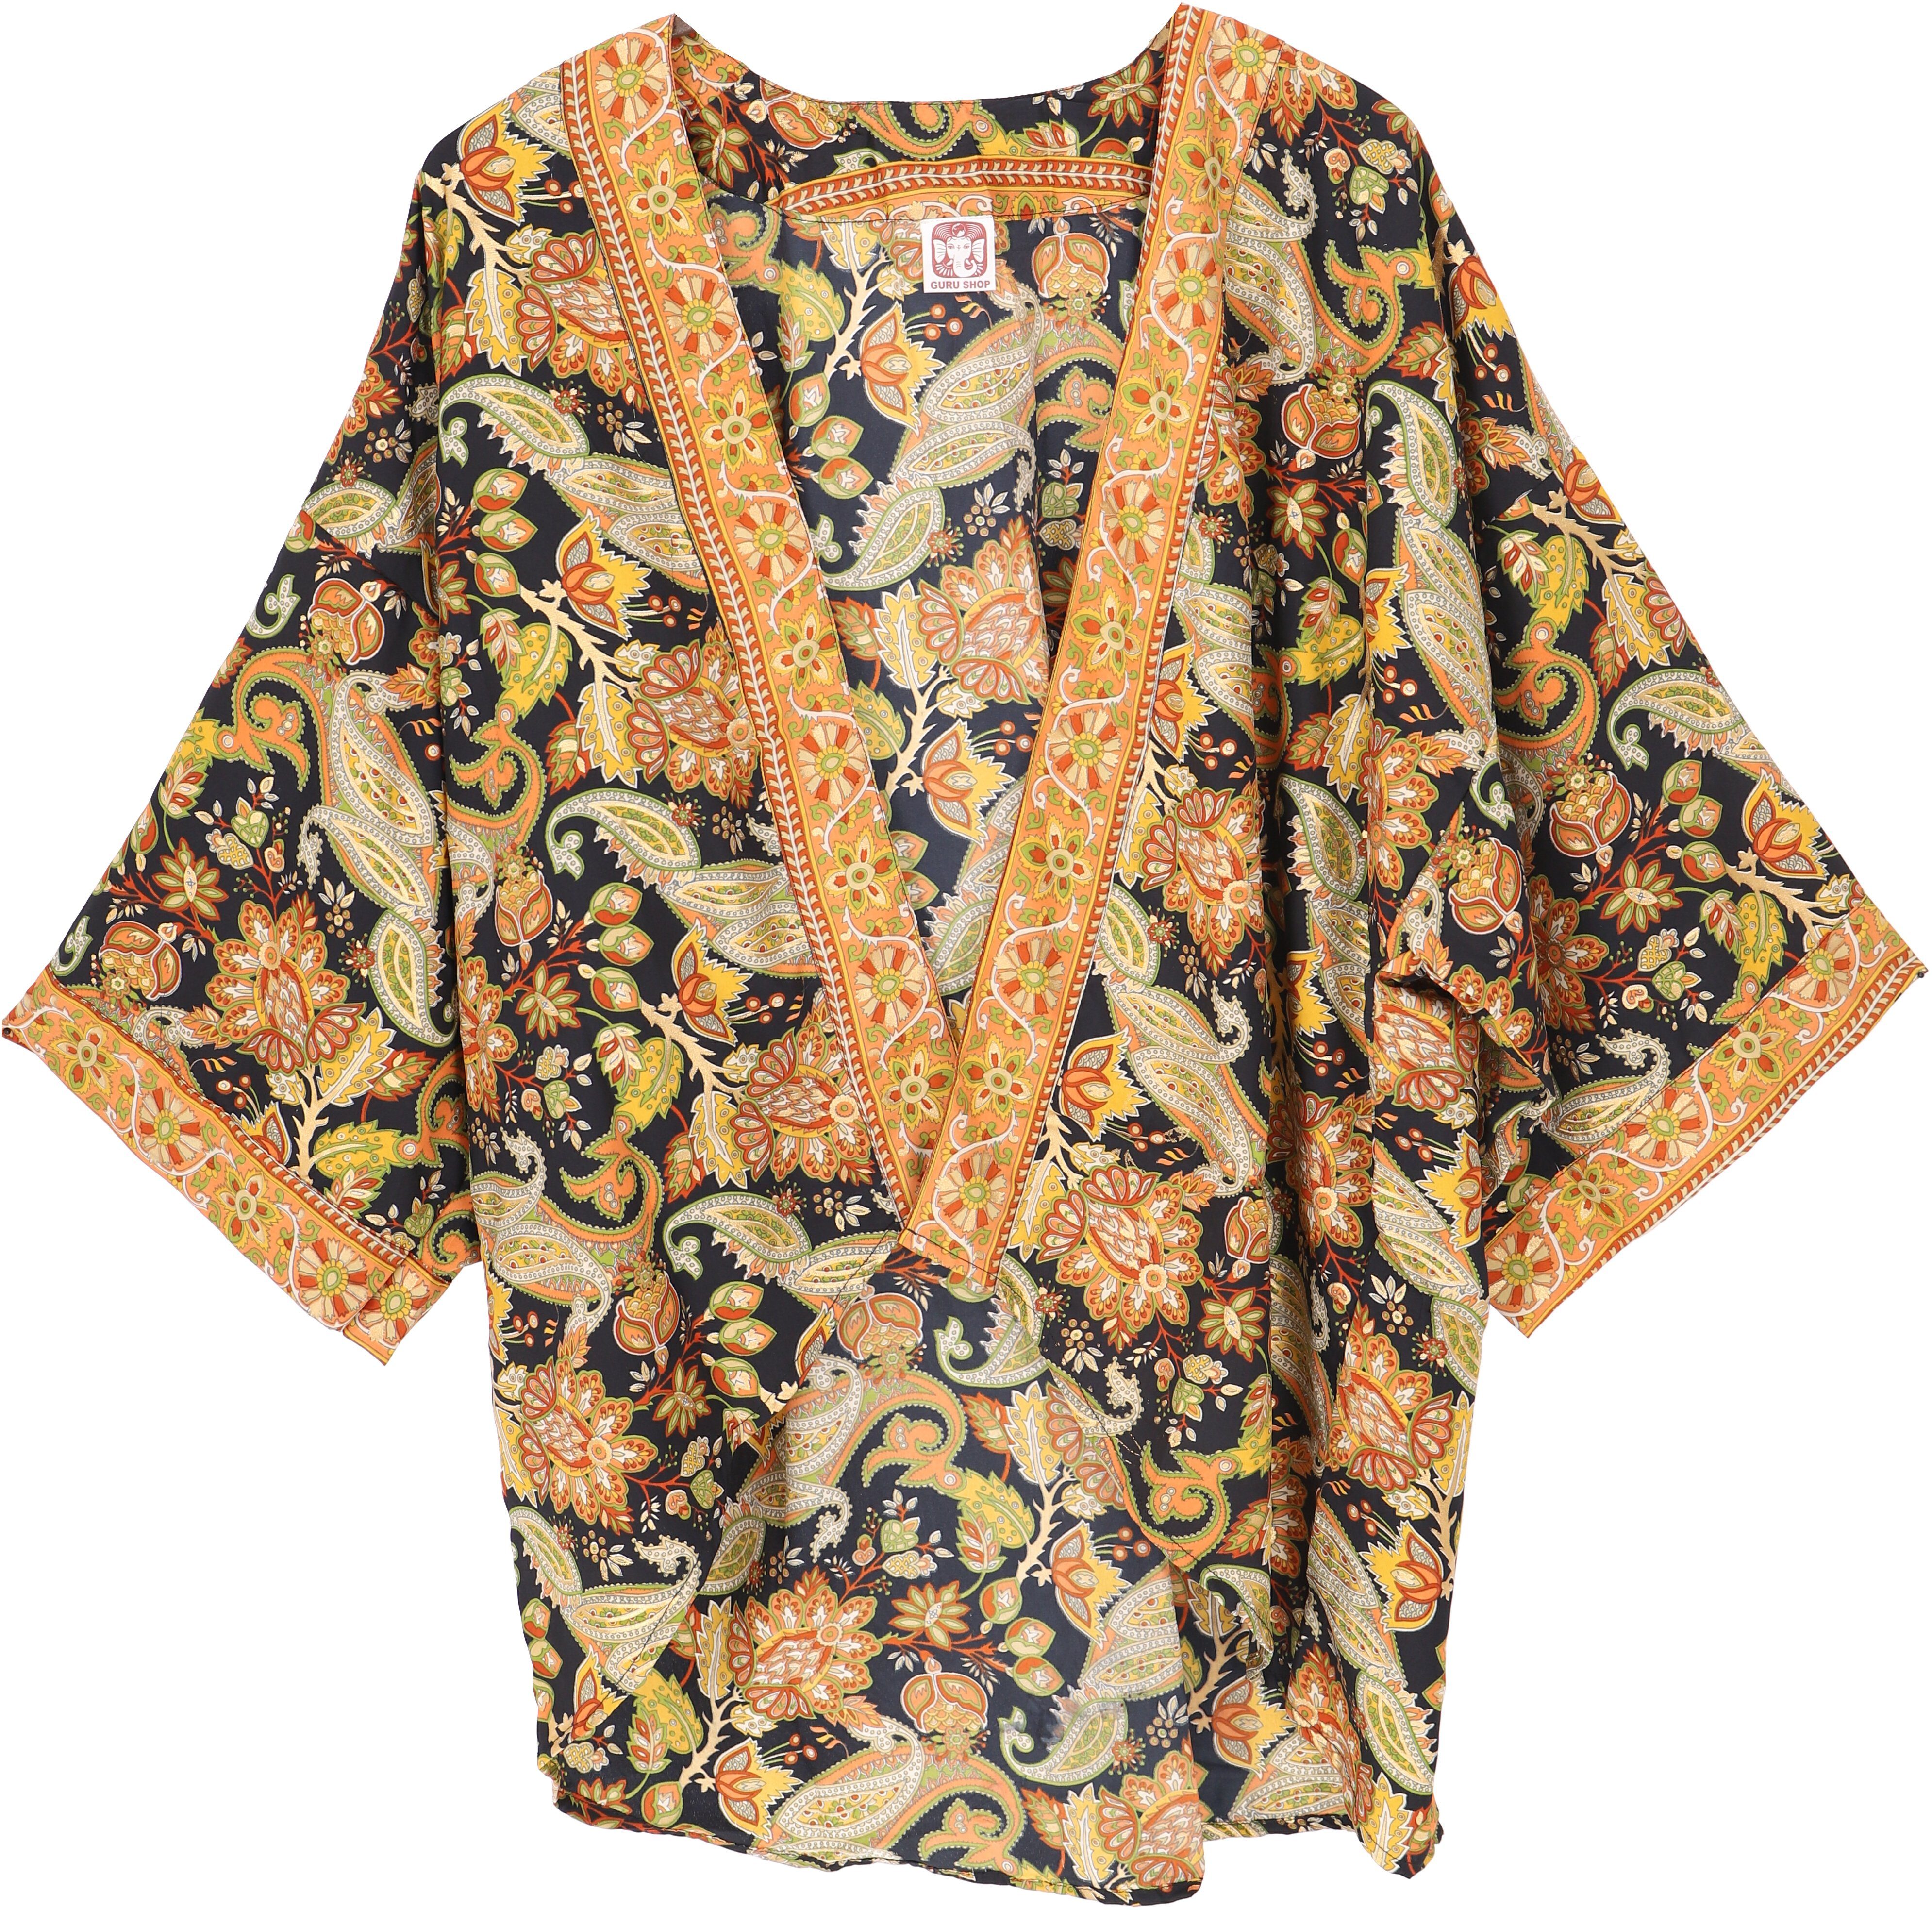 Guru-Shop Kimono Kurzer schwarz/orange -.., Kimono, Kimono, Kimono alternative offener Bekleidung Boho